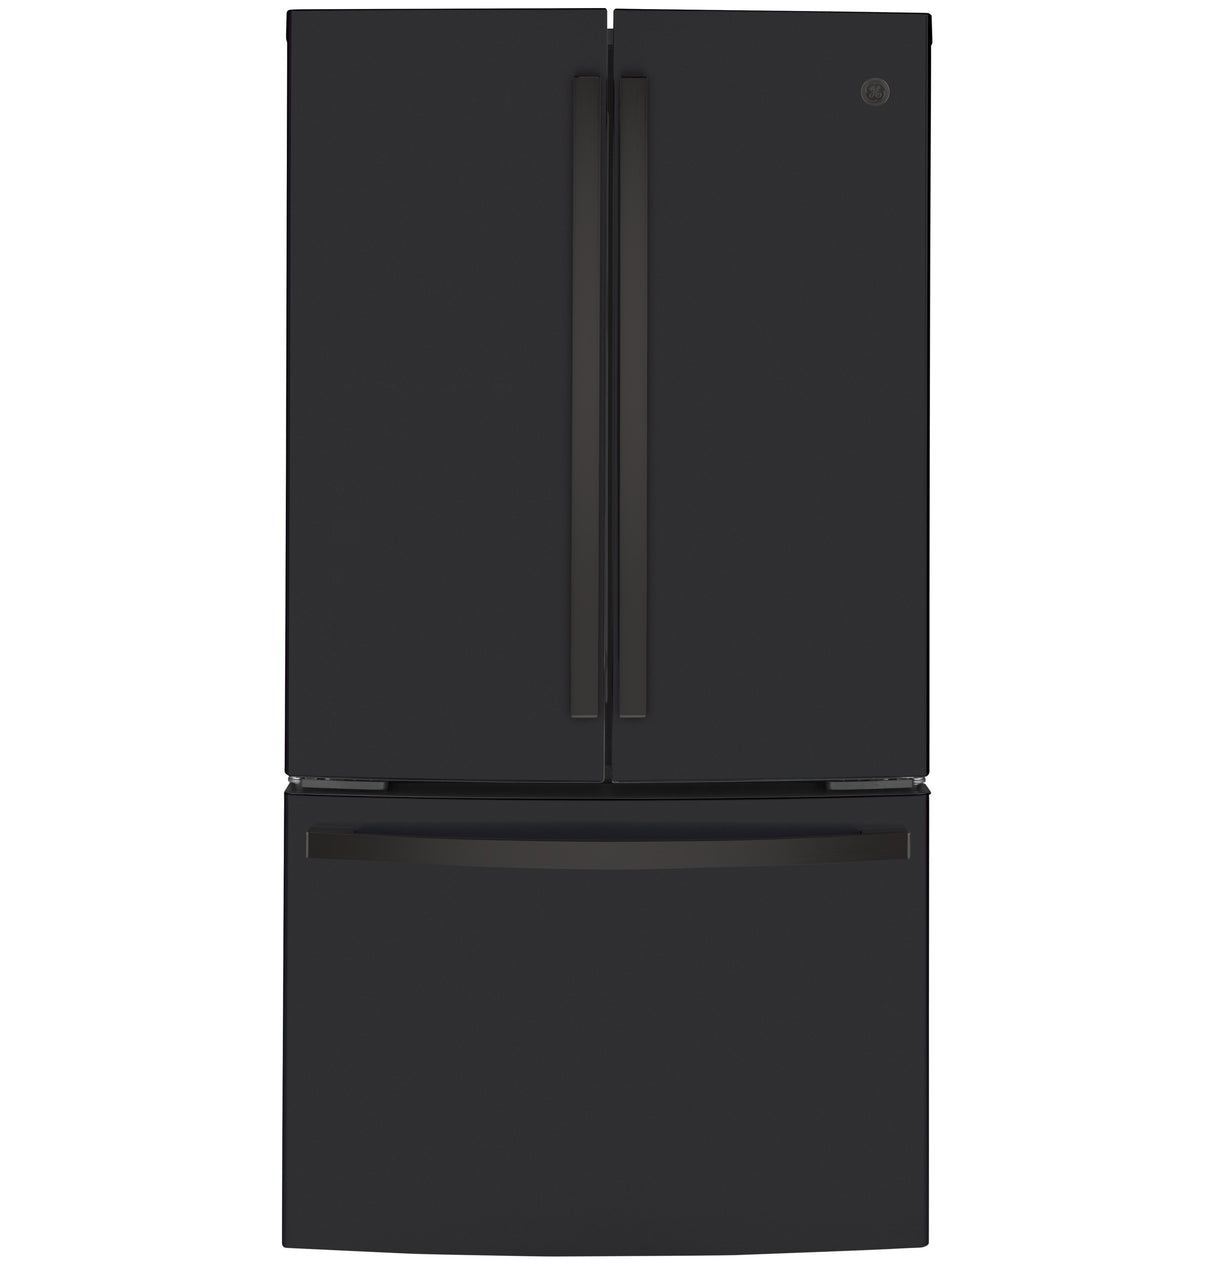 GE(R) ENERGY STAR(R) 23.1 Cu. Ft. Counter-Depth French-Door Refrigerator - (GWE23GENDS)